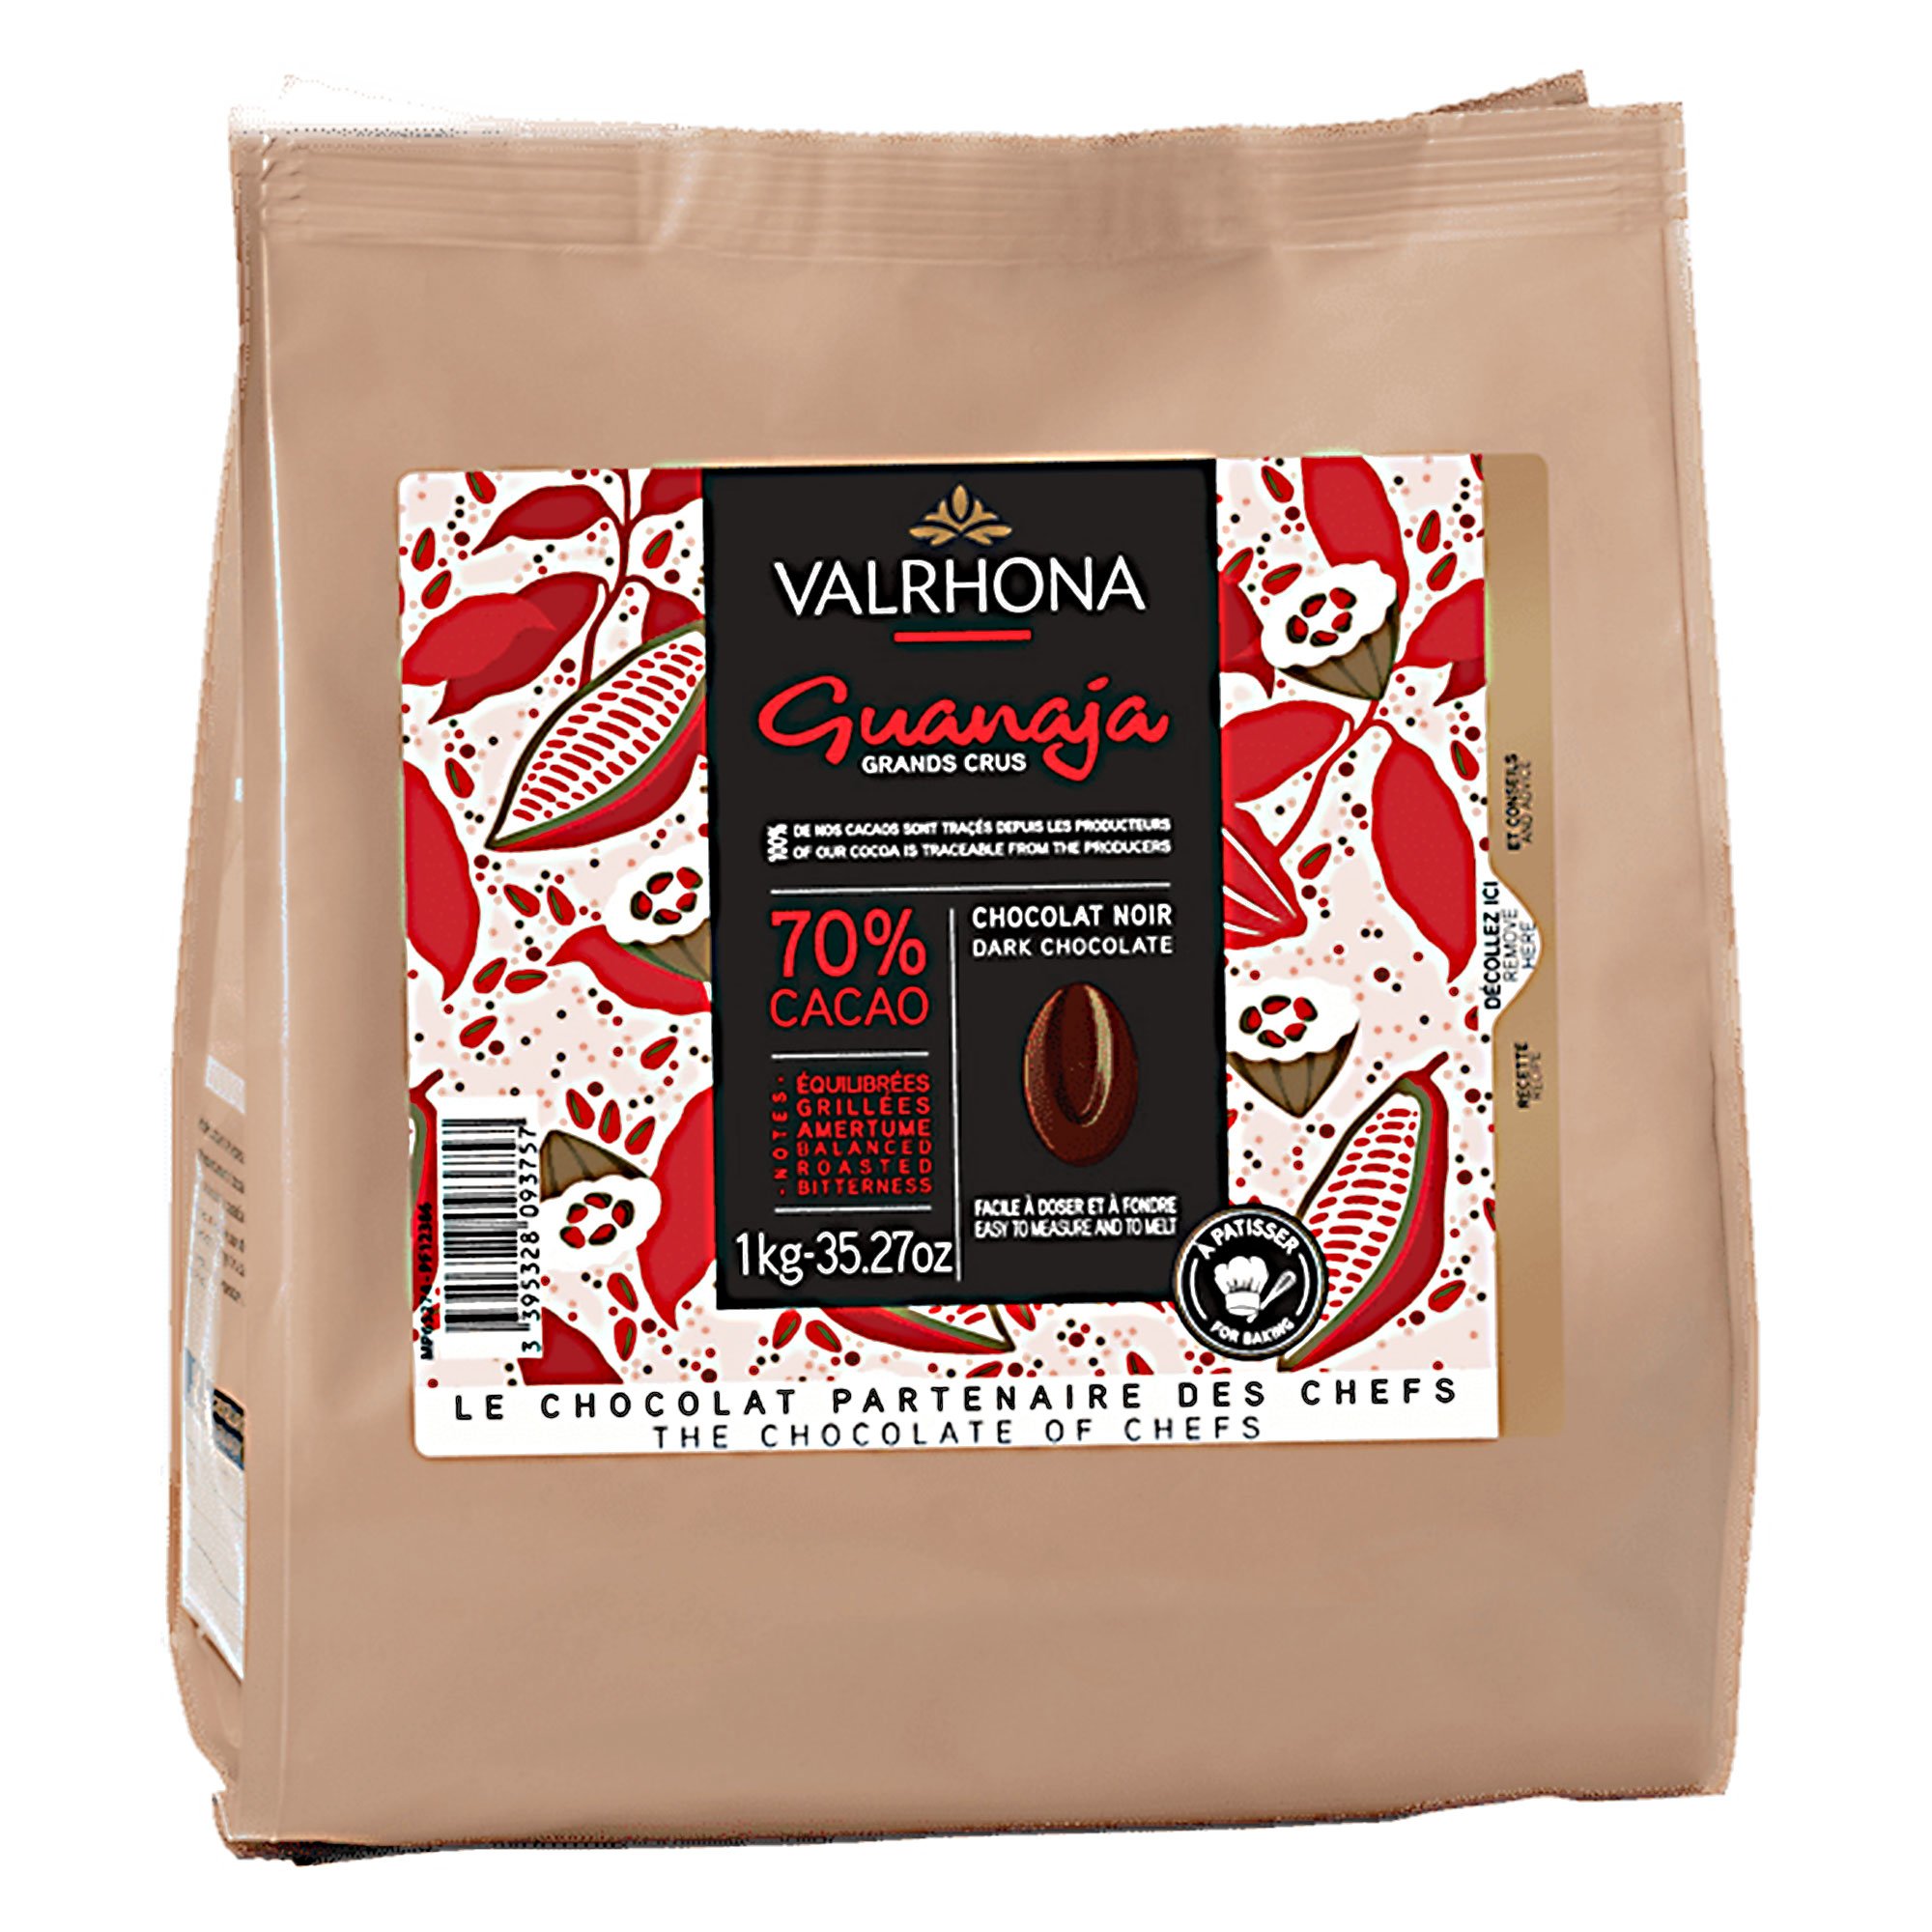 Valrhona Guanaja 70% mörk choklad 1 kg